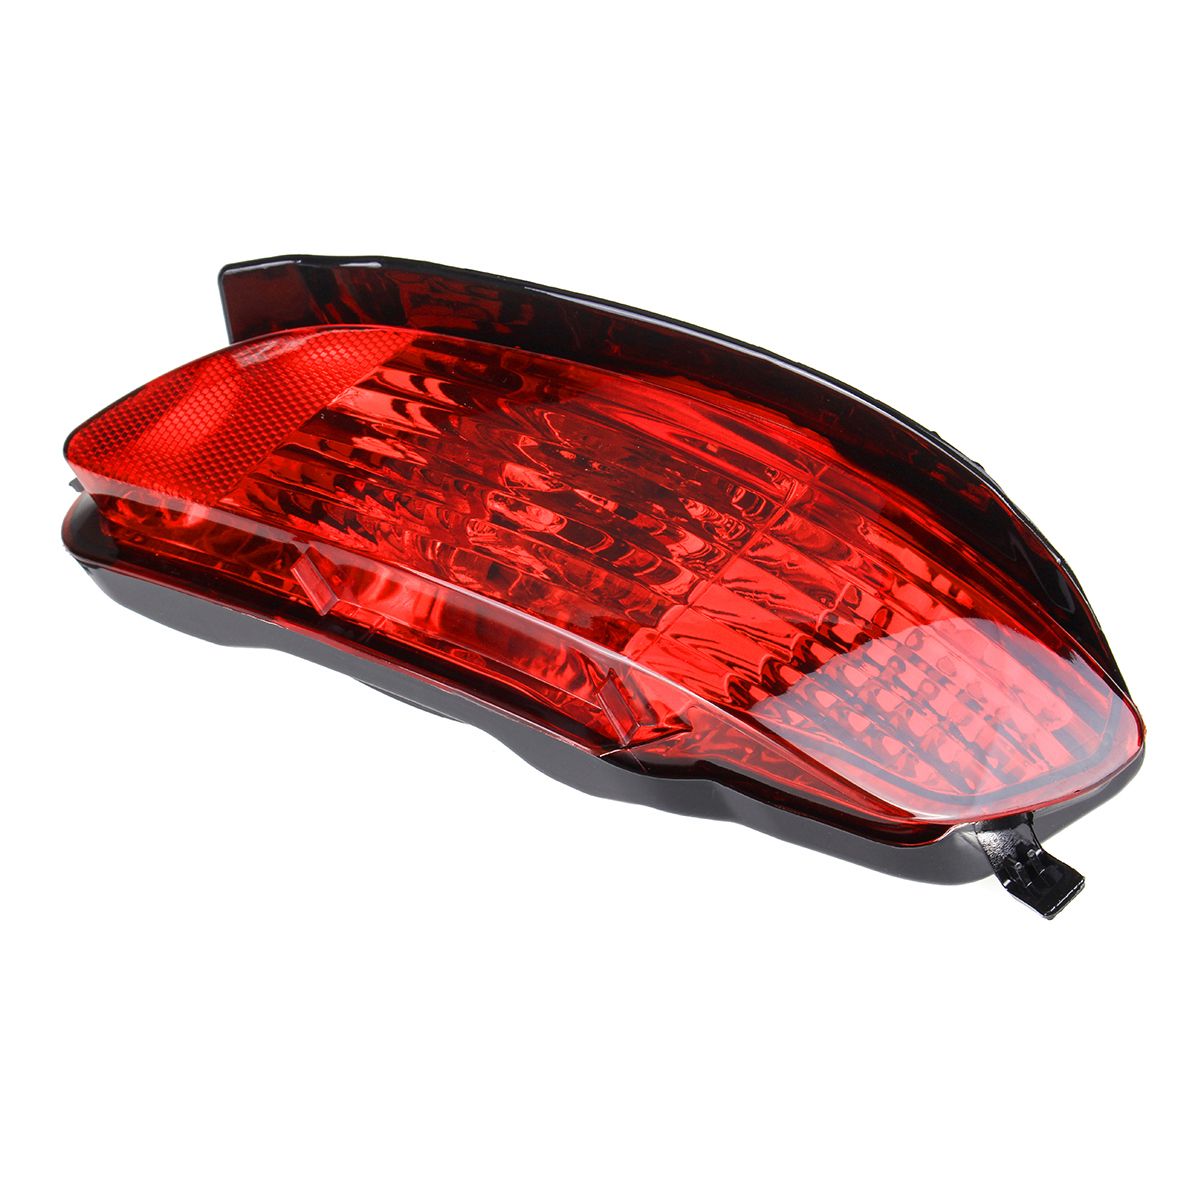 Pair-LED-Car-Rear-Bumper-Reflector-Fog-Lights-Tail-Brake-Lamps-for-Lexus-RX350-RX330-RX300-2003-2008-1329514